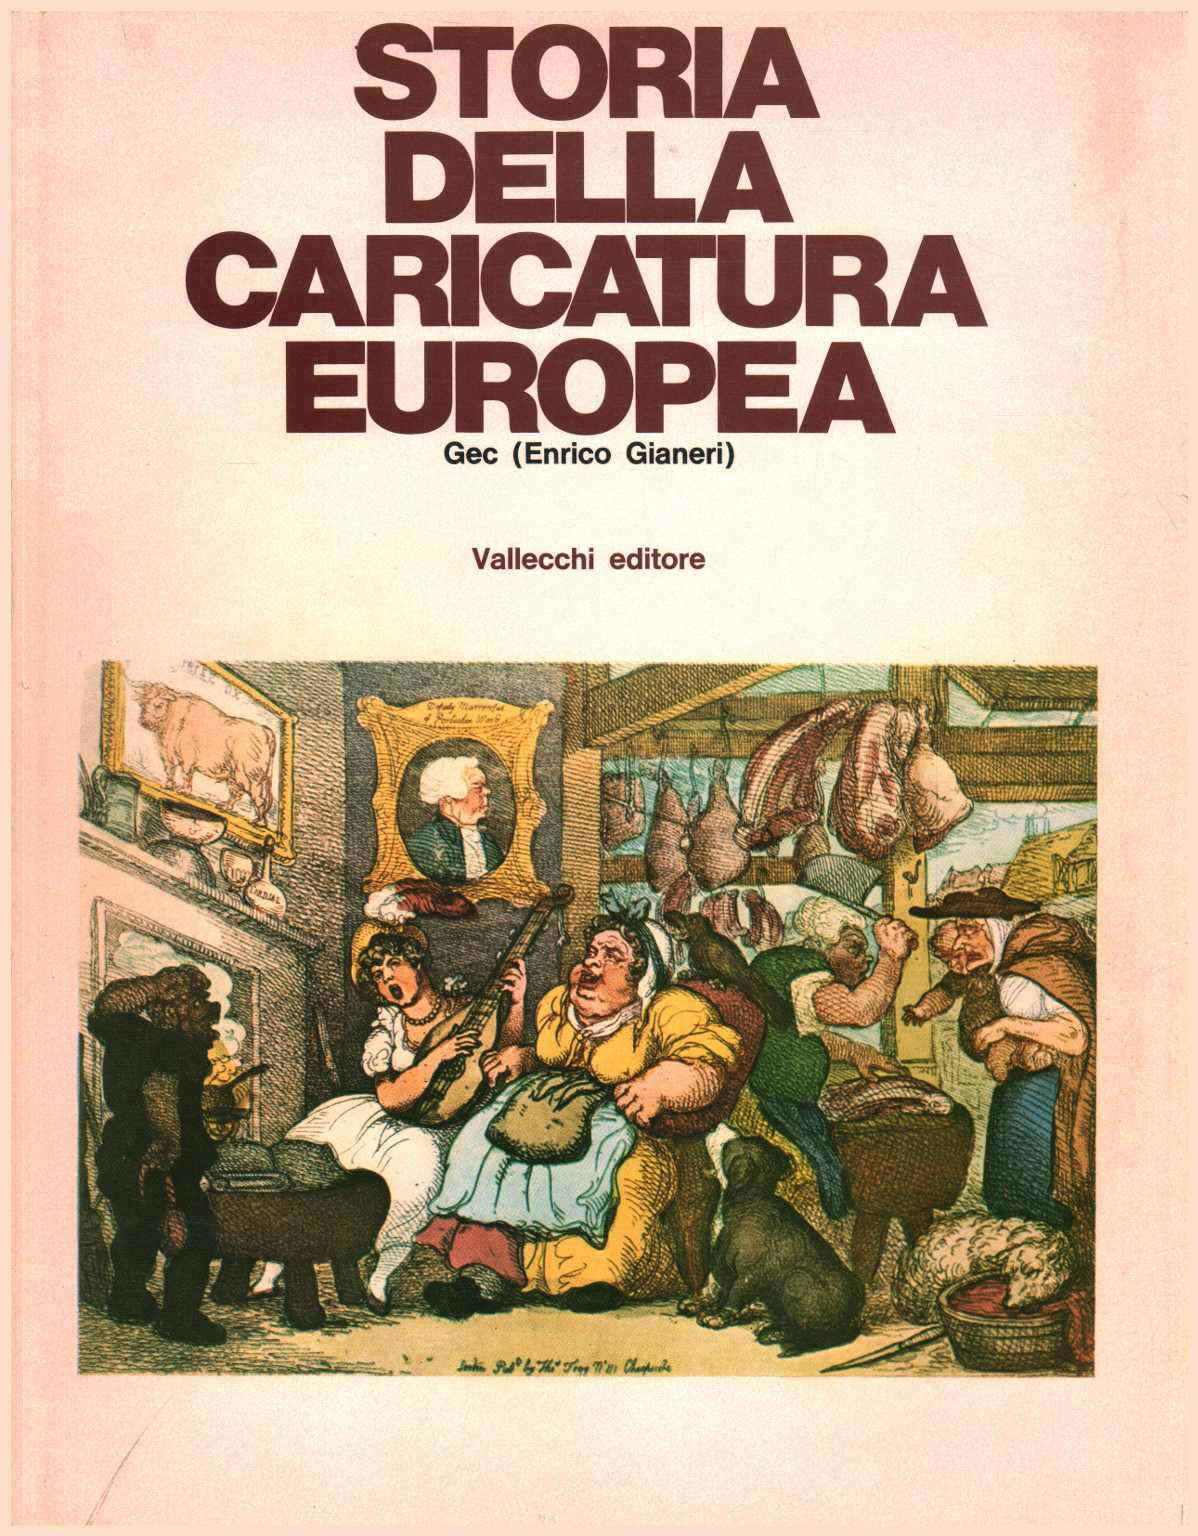 Geschichte der europäischen Karikatur